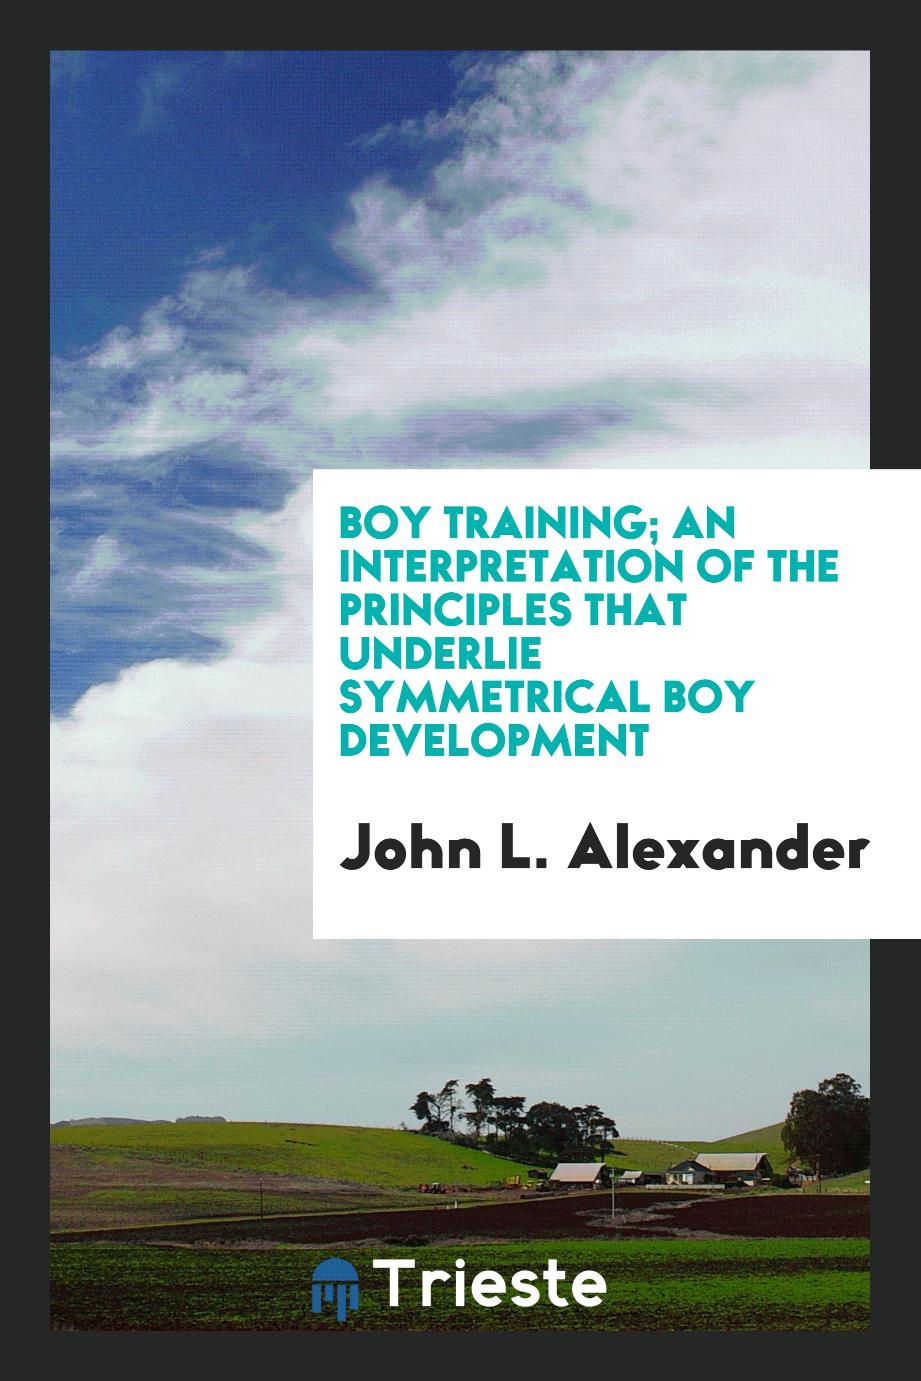 John L. Alexander - Boy training; an interpretation of the principles that underlie symmetrical boy development